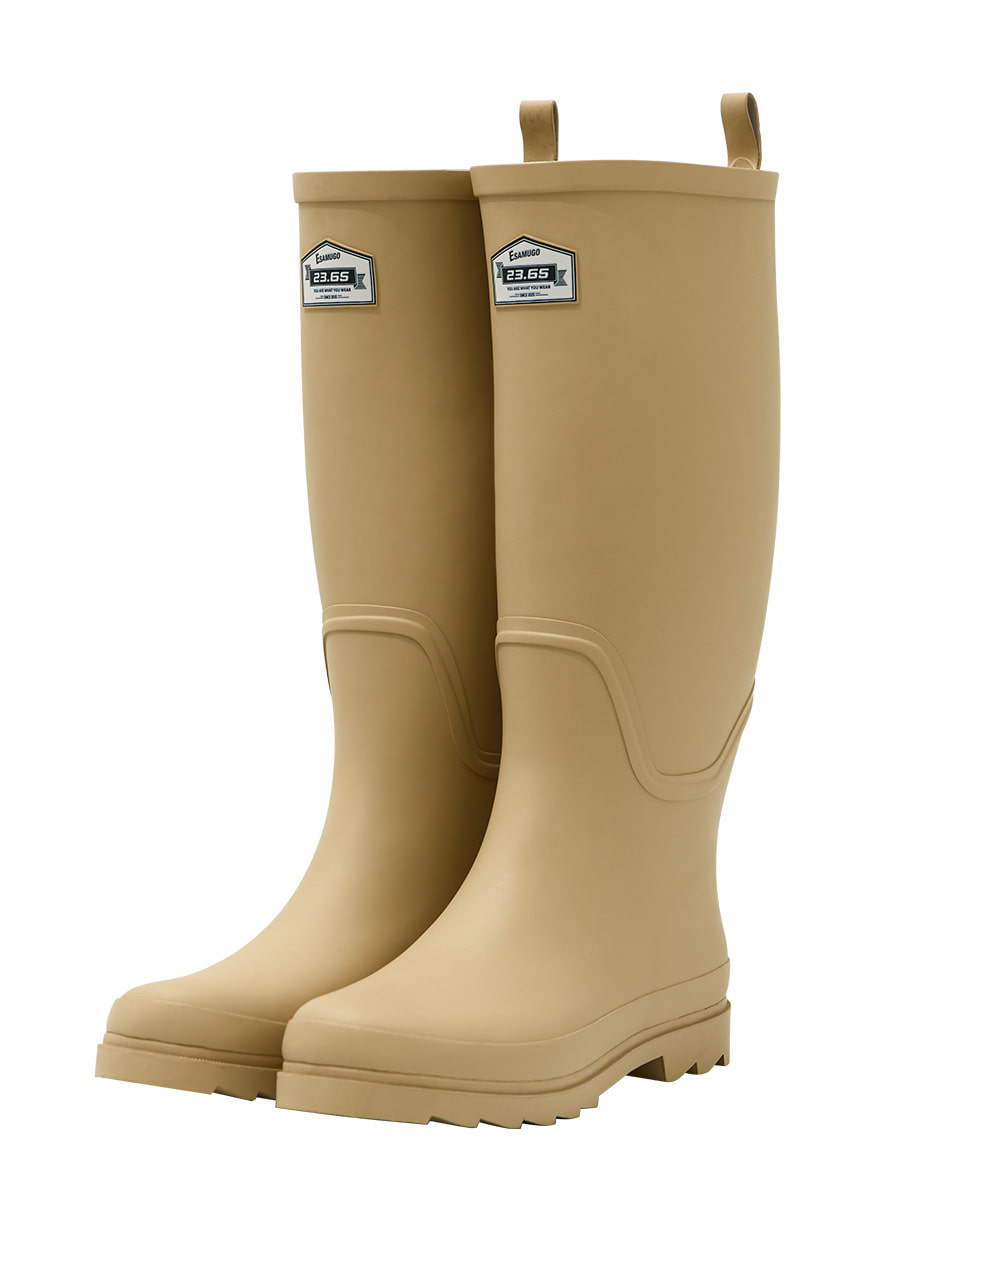 23.65 Rain Boots 長筒棕色雨靴